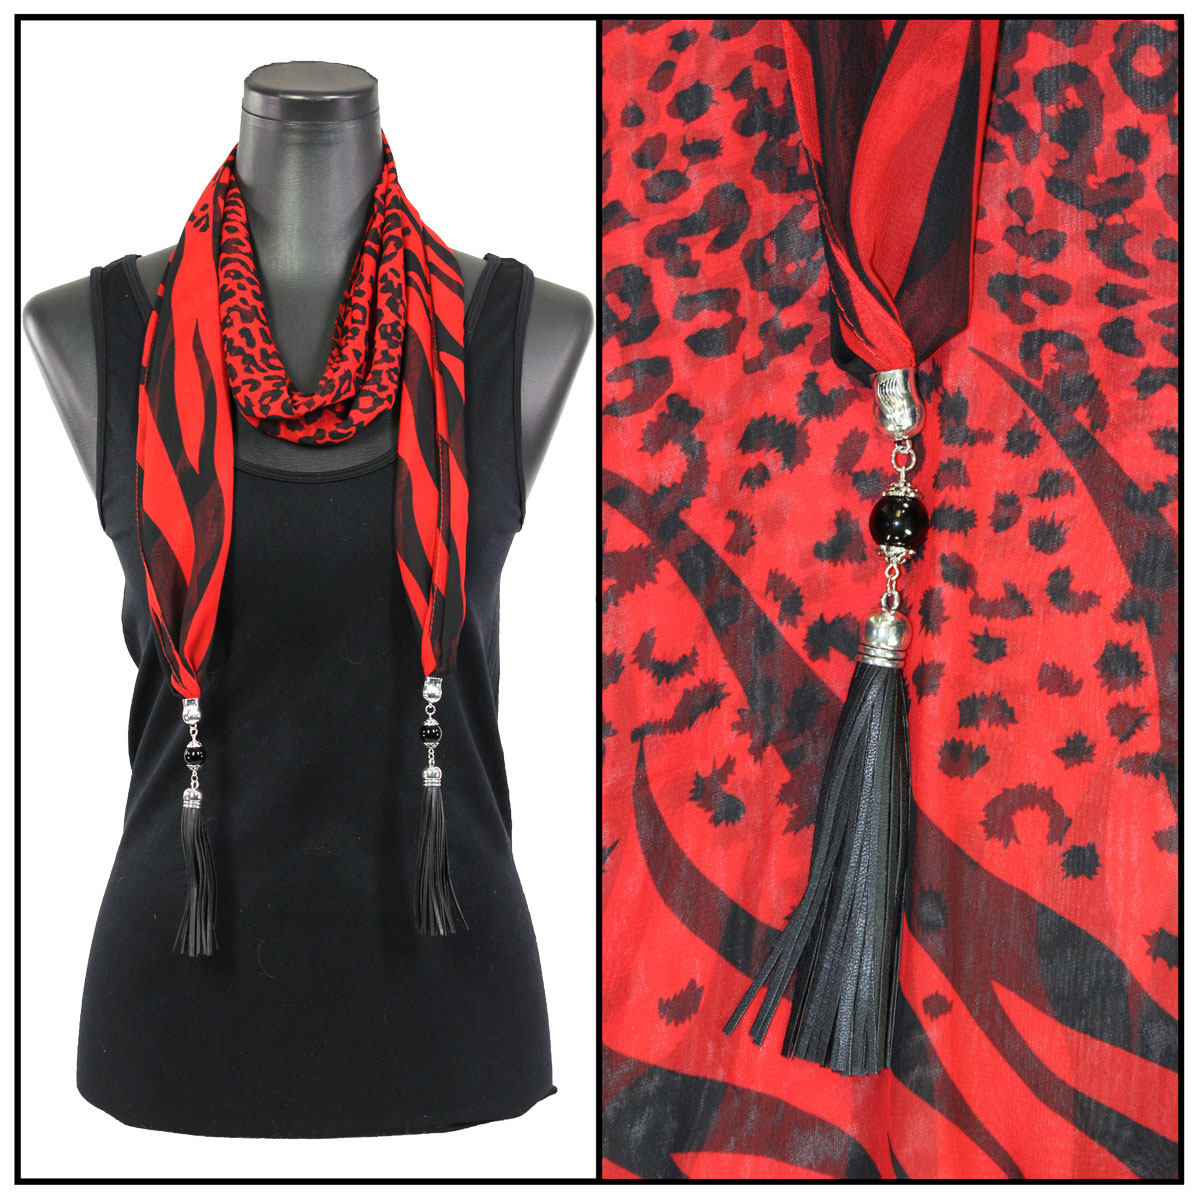 9001 - Tasseled Silky Dress Scarves